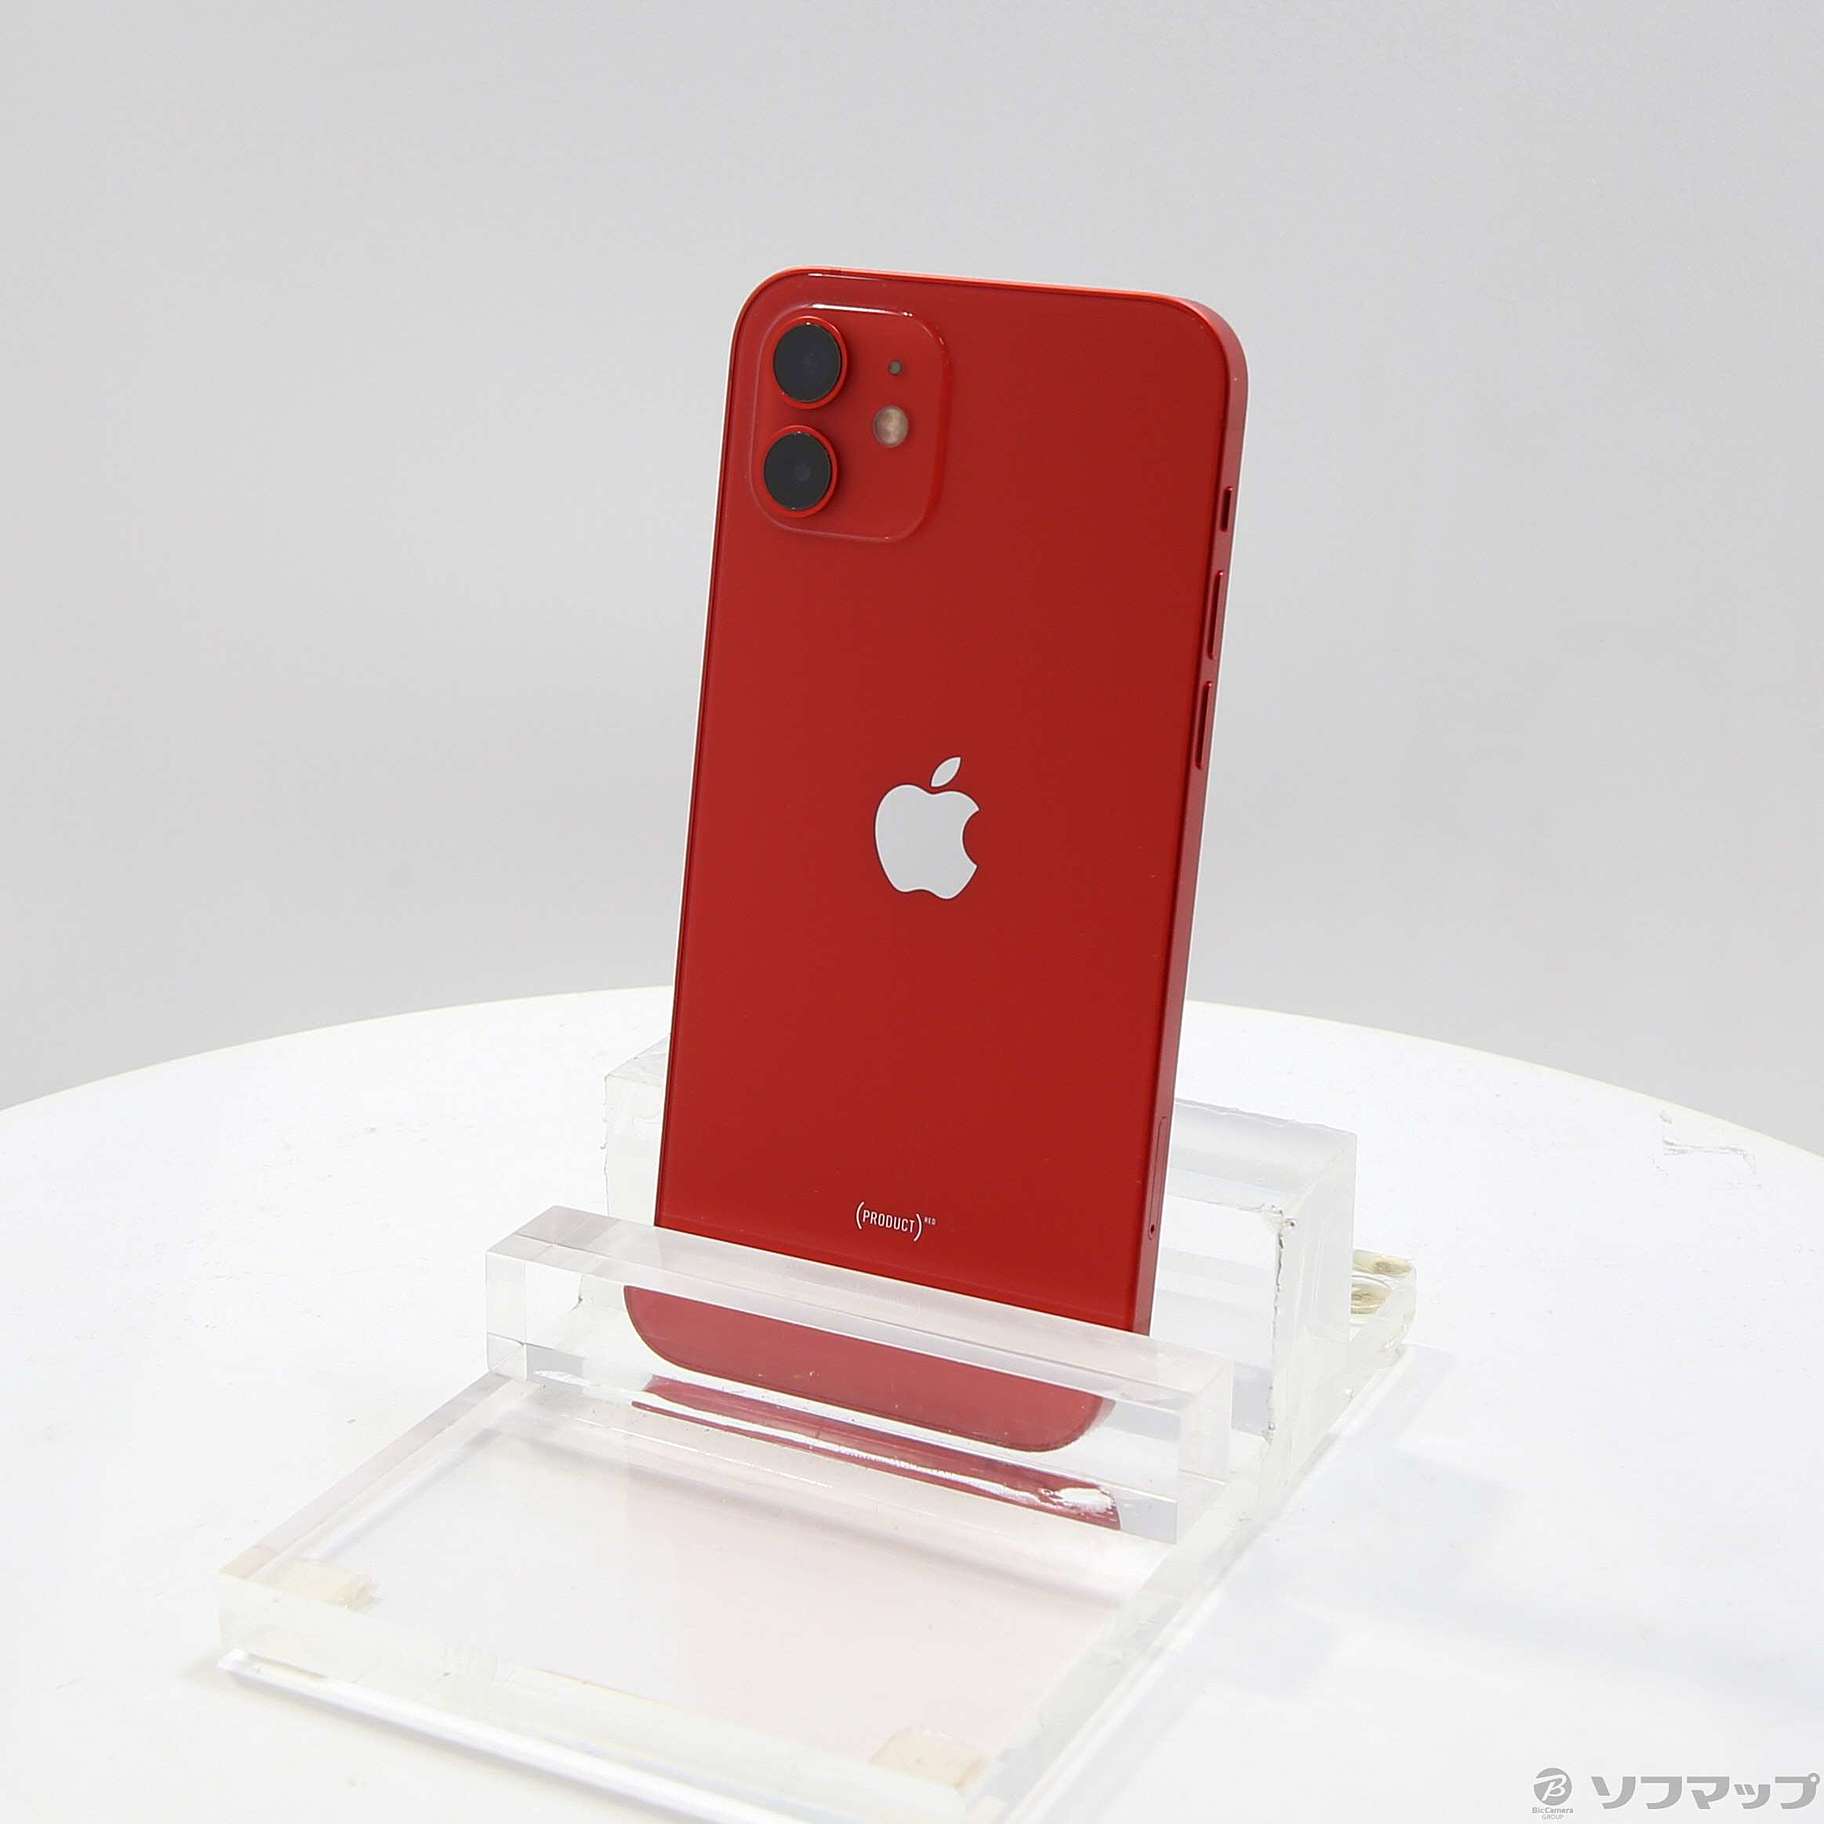 iPhone 12 (PRODUCT)RED 64GB SIMフリー [レッド] 中古(白ロム)価格比較 - 価格.com